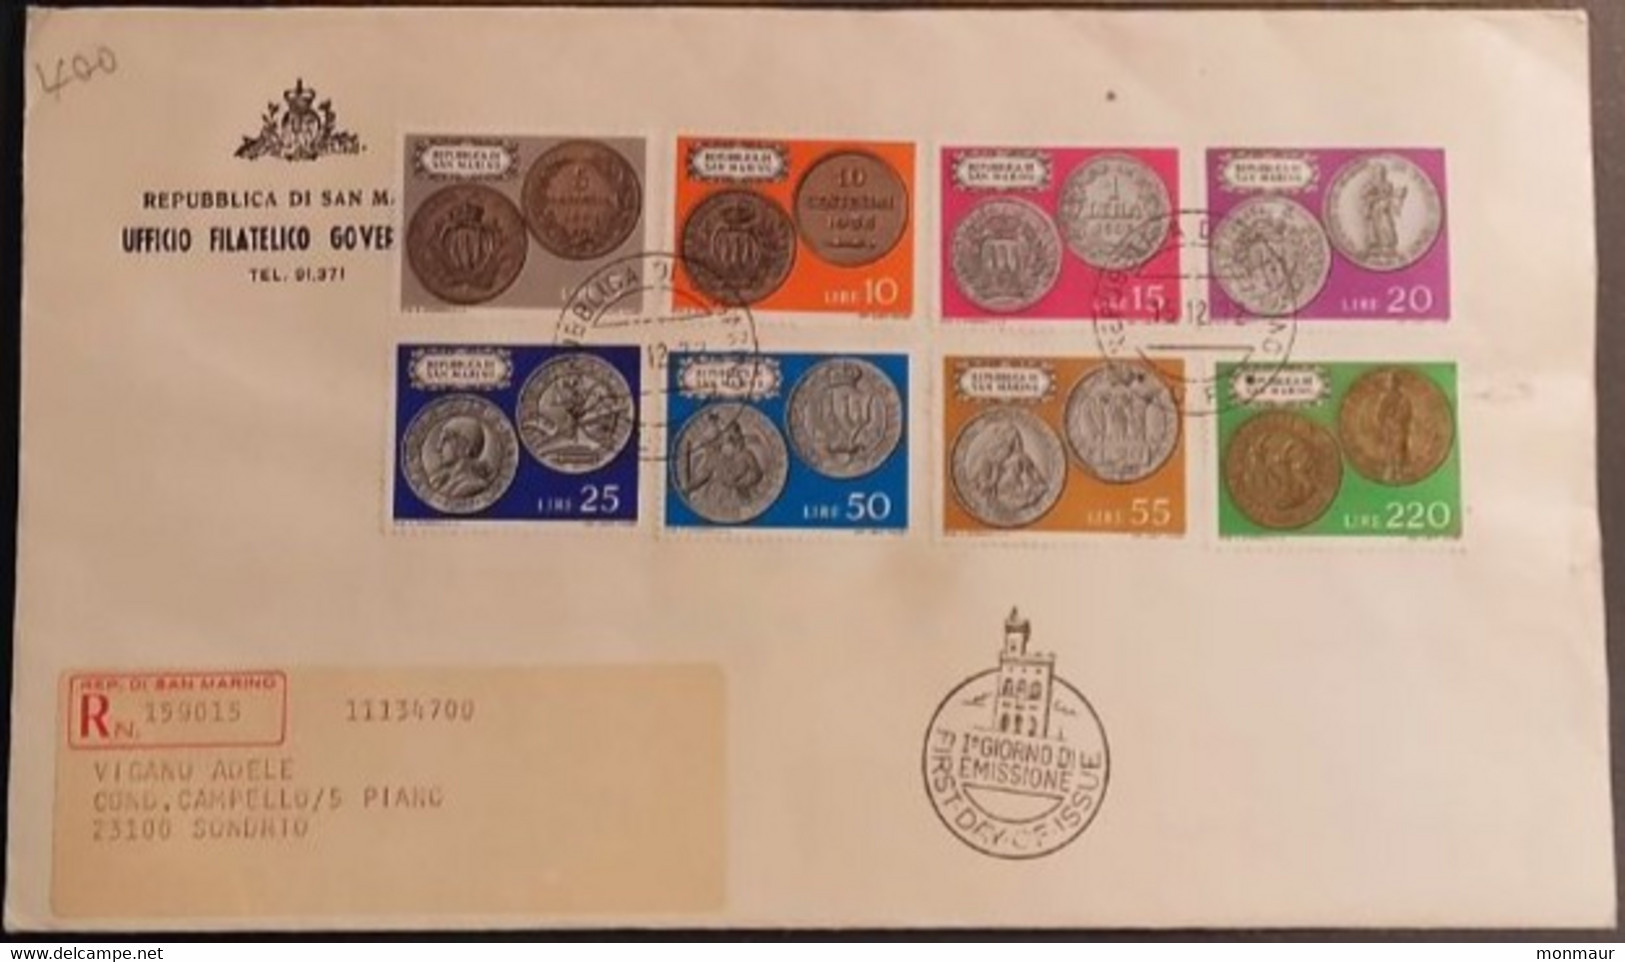 SAN MARINO 1972 RACCOMANDATA FDC MONETE DI SAN MARINO - Used Stamps